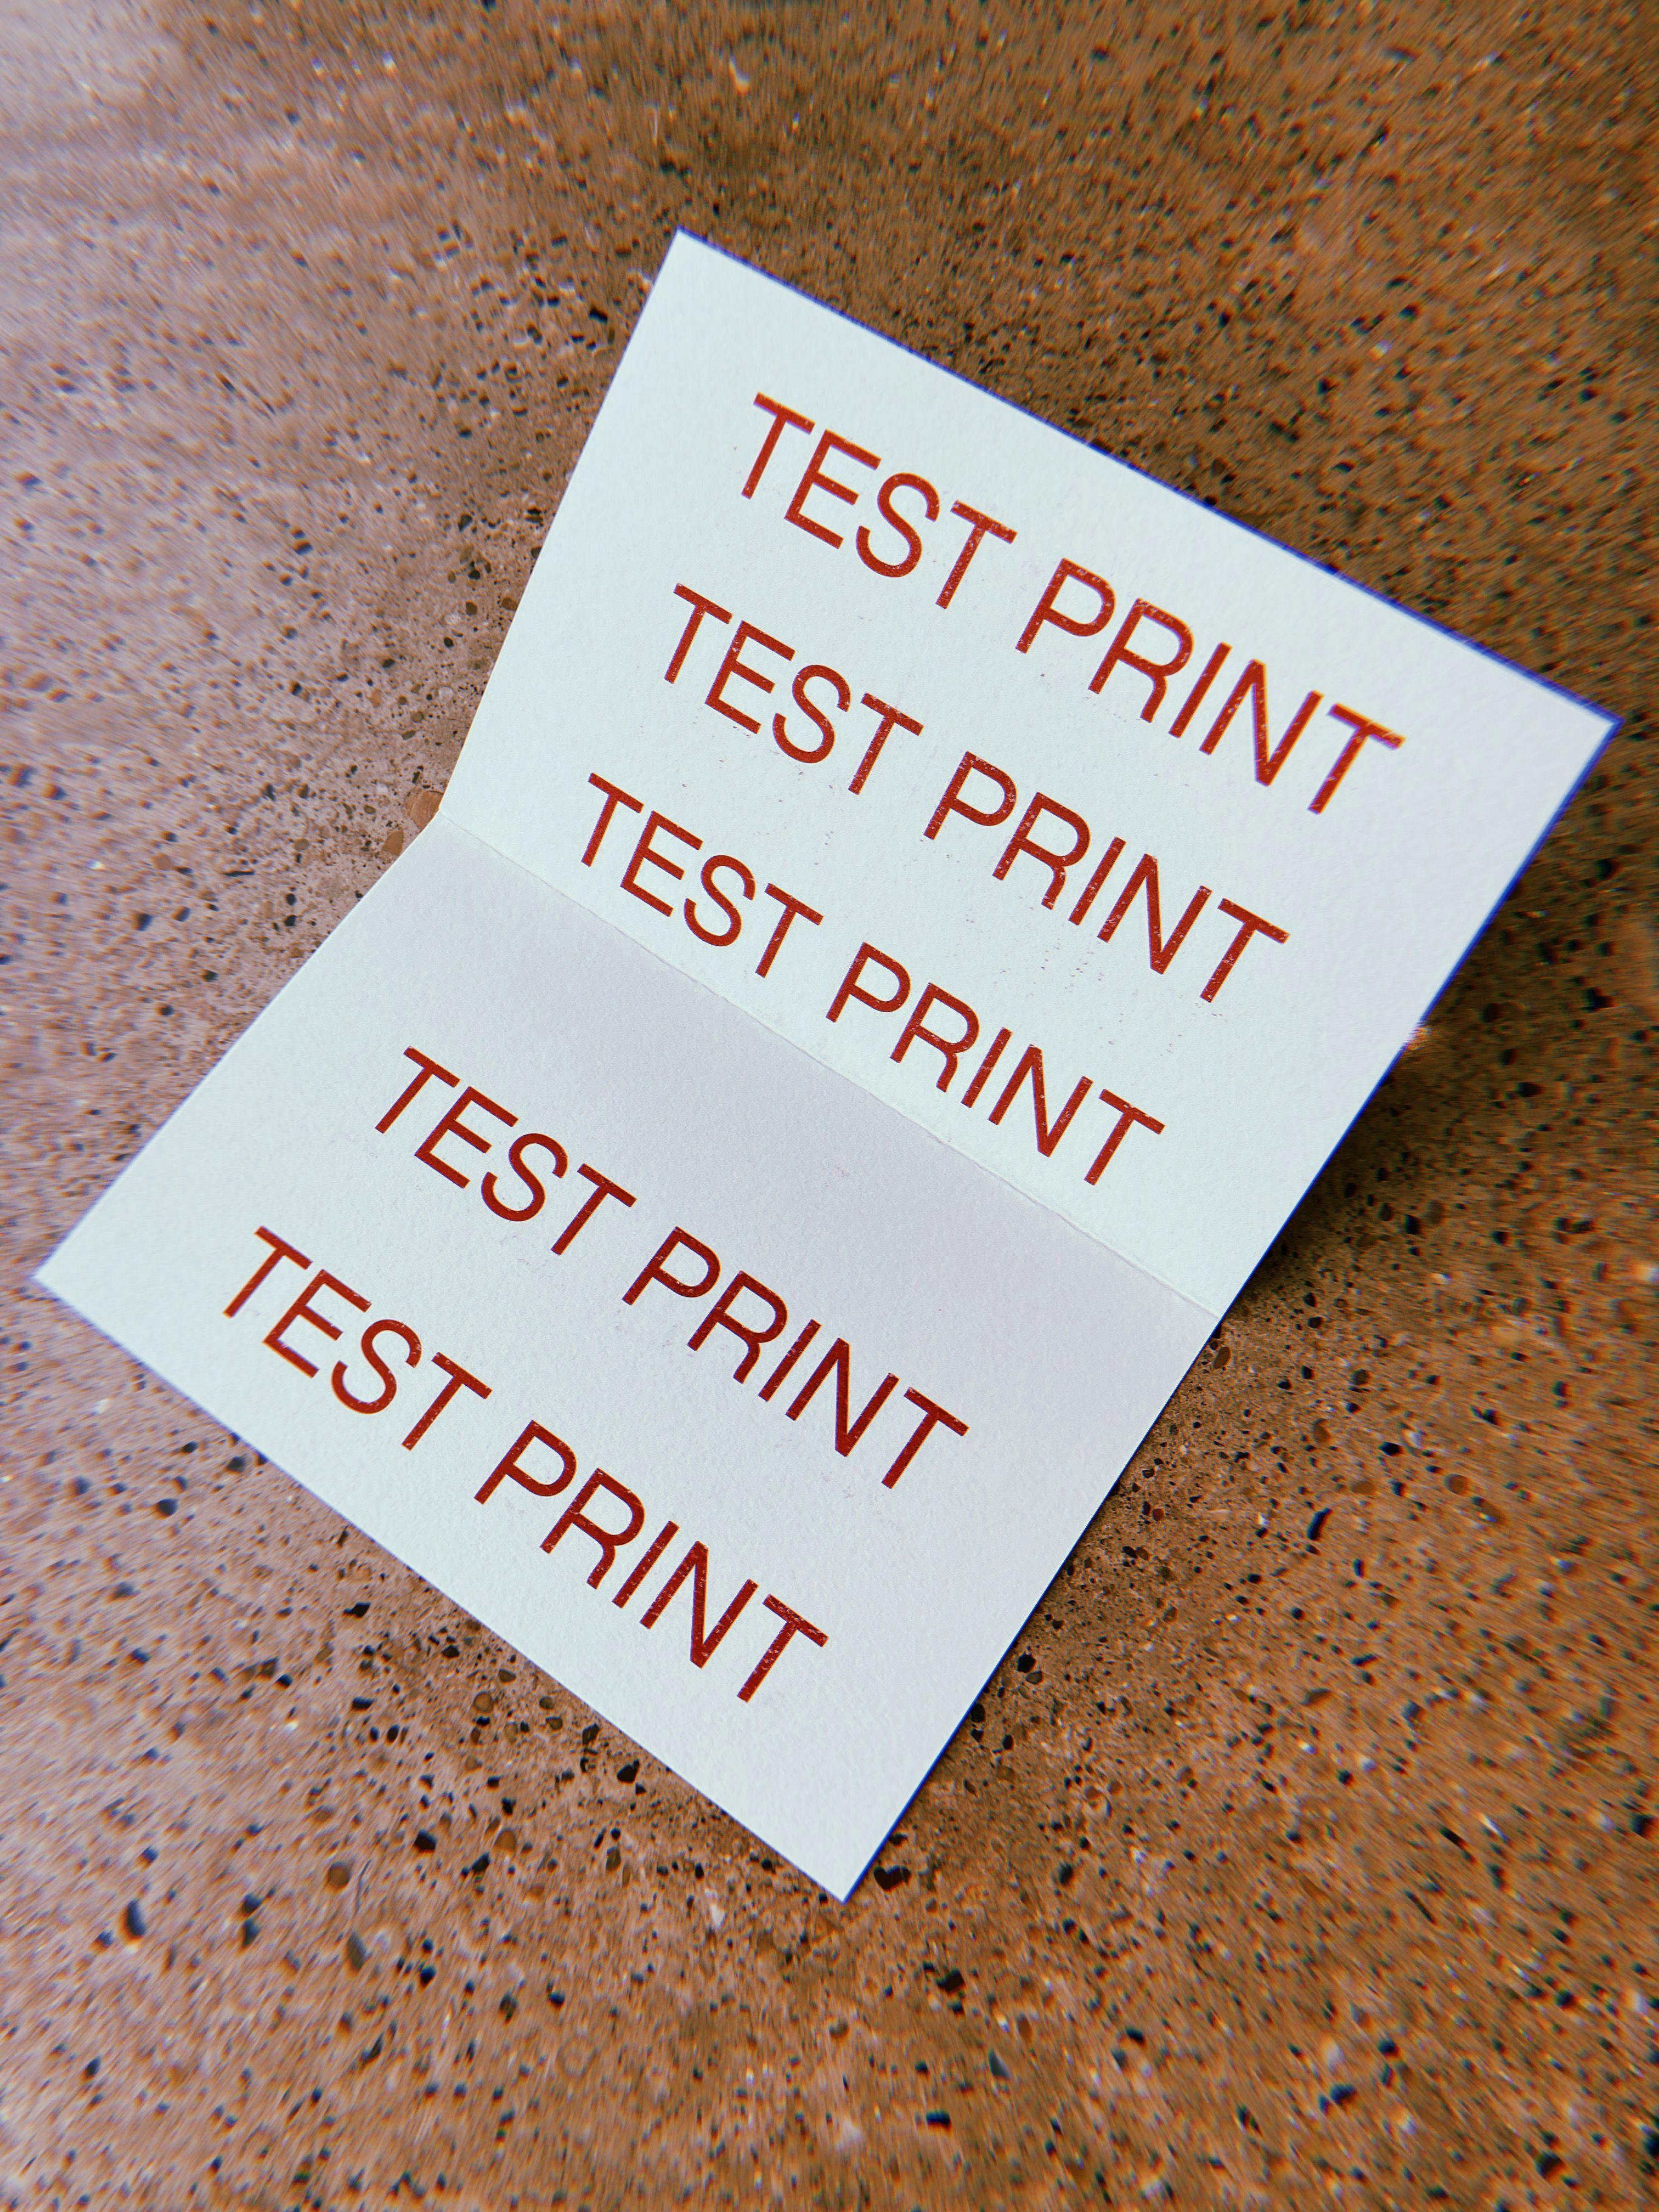 TEST PRINT TEST PRINT TEST PRINT TEST PRINT TEST PRINT